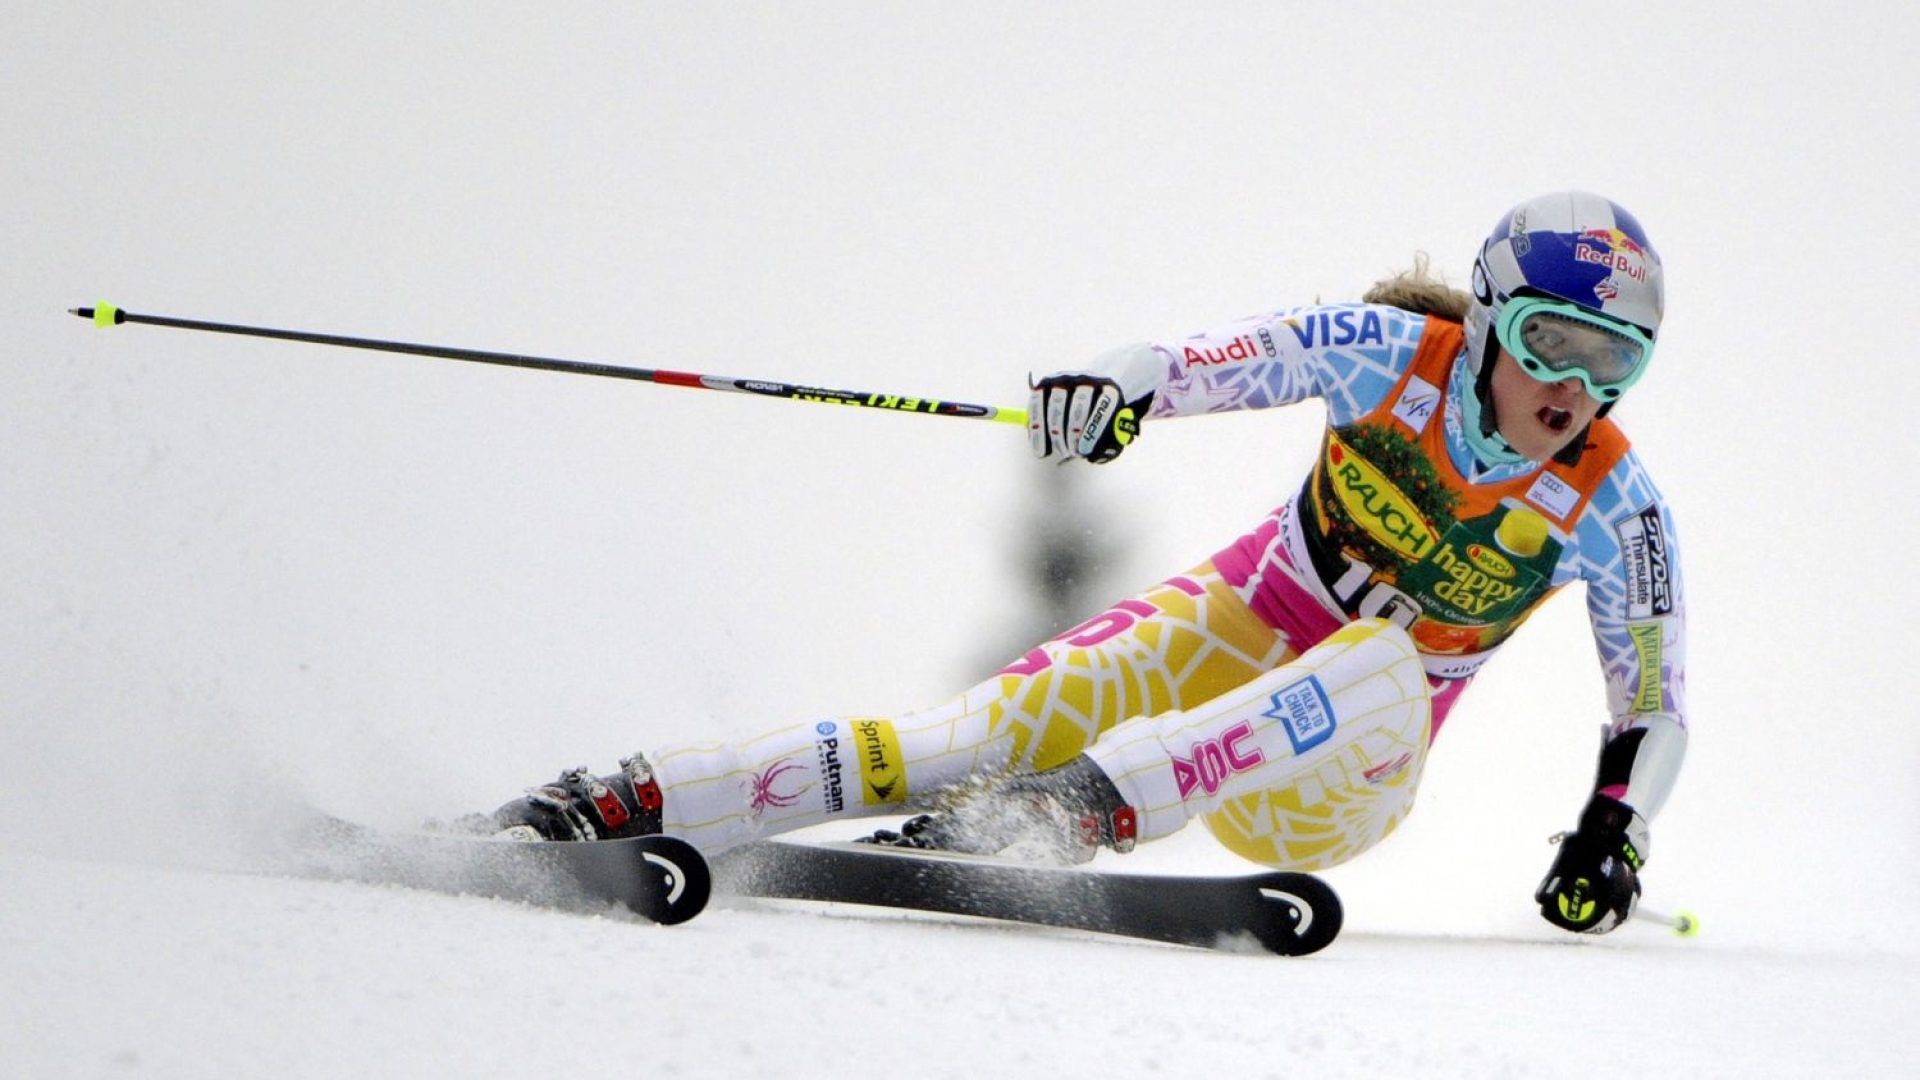 Ski World Cup 2010-2011 - Spindleruv Mlyn (CZE) , 11 marzo 2011 - Slalom Gigante - Likndsey Vonn (USA)  (Gio Auletta/Pentaphoto)